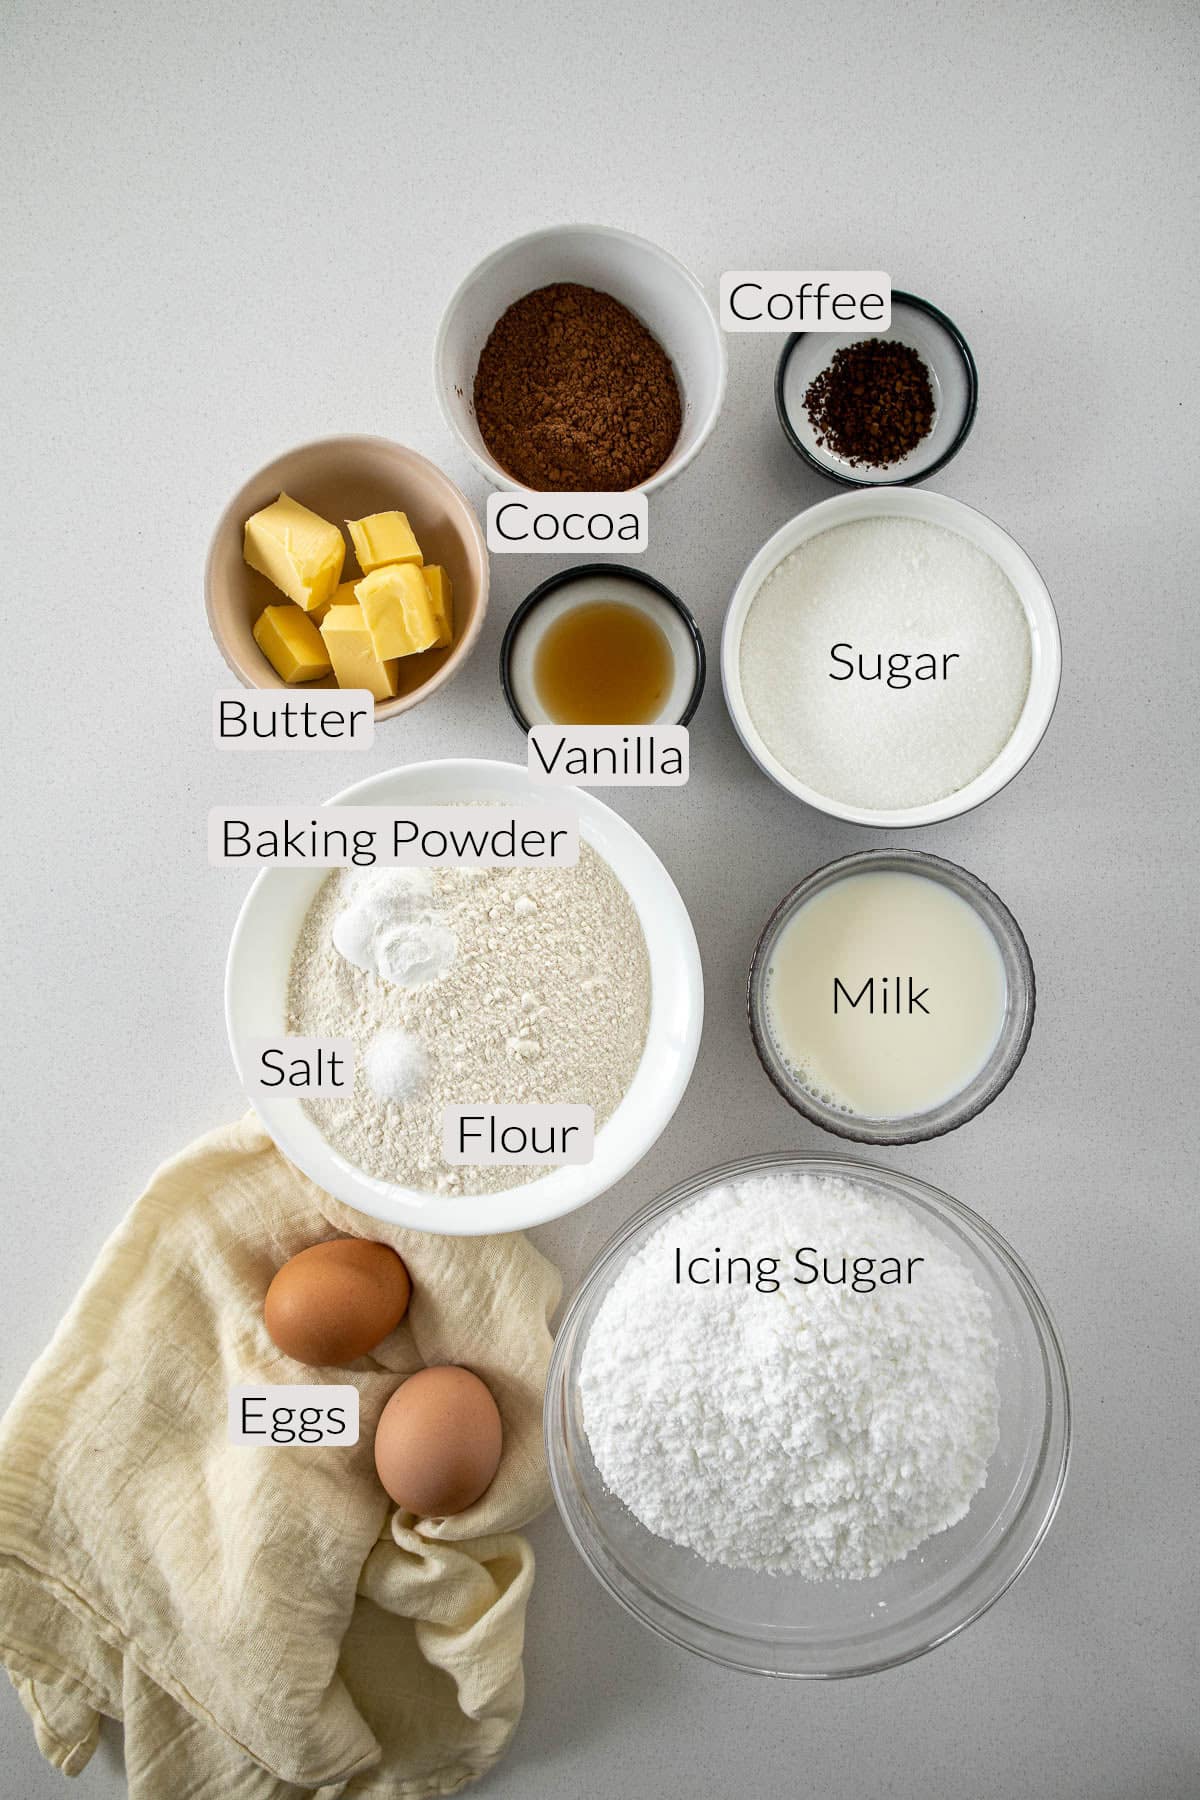 Chocolate Cupcakes Ingredients - butter, cocoa, coffee, vanilla, sugar, baking powder, salt, flour, milk, eggs, and icing sugar.